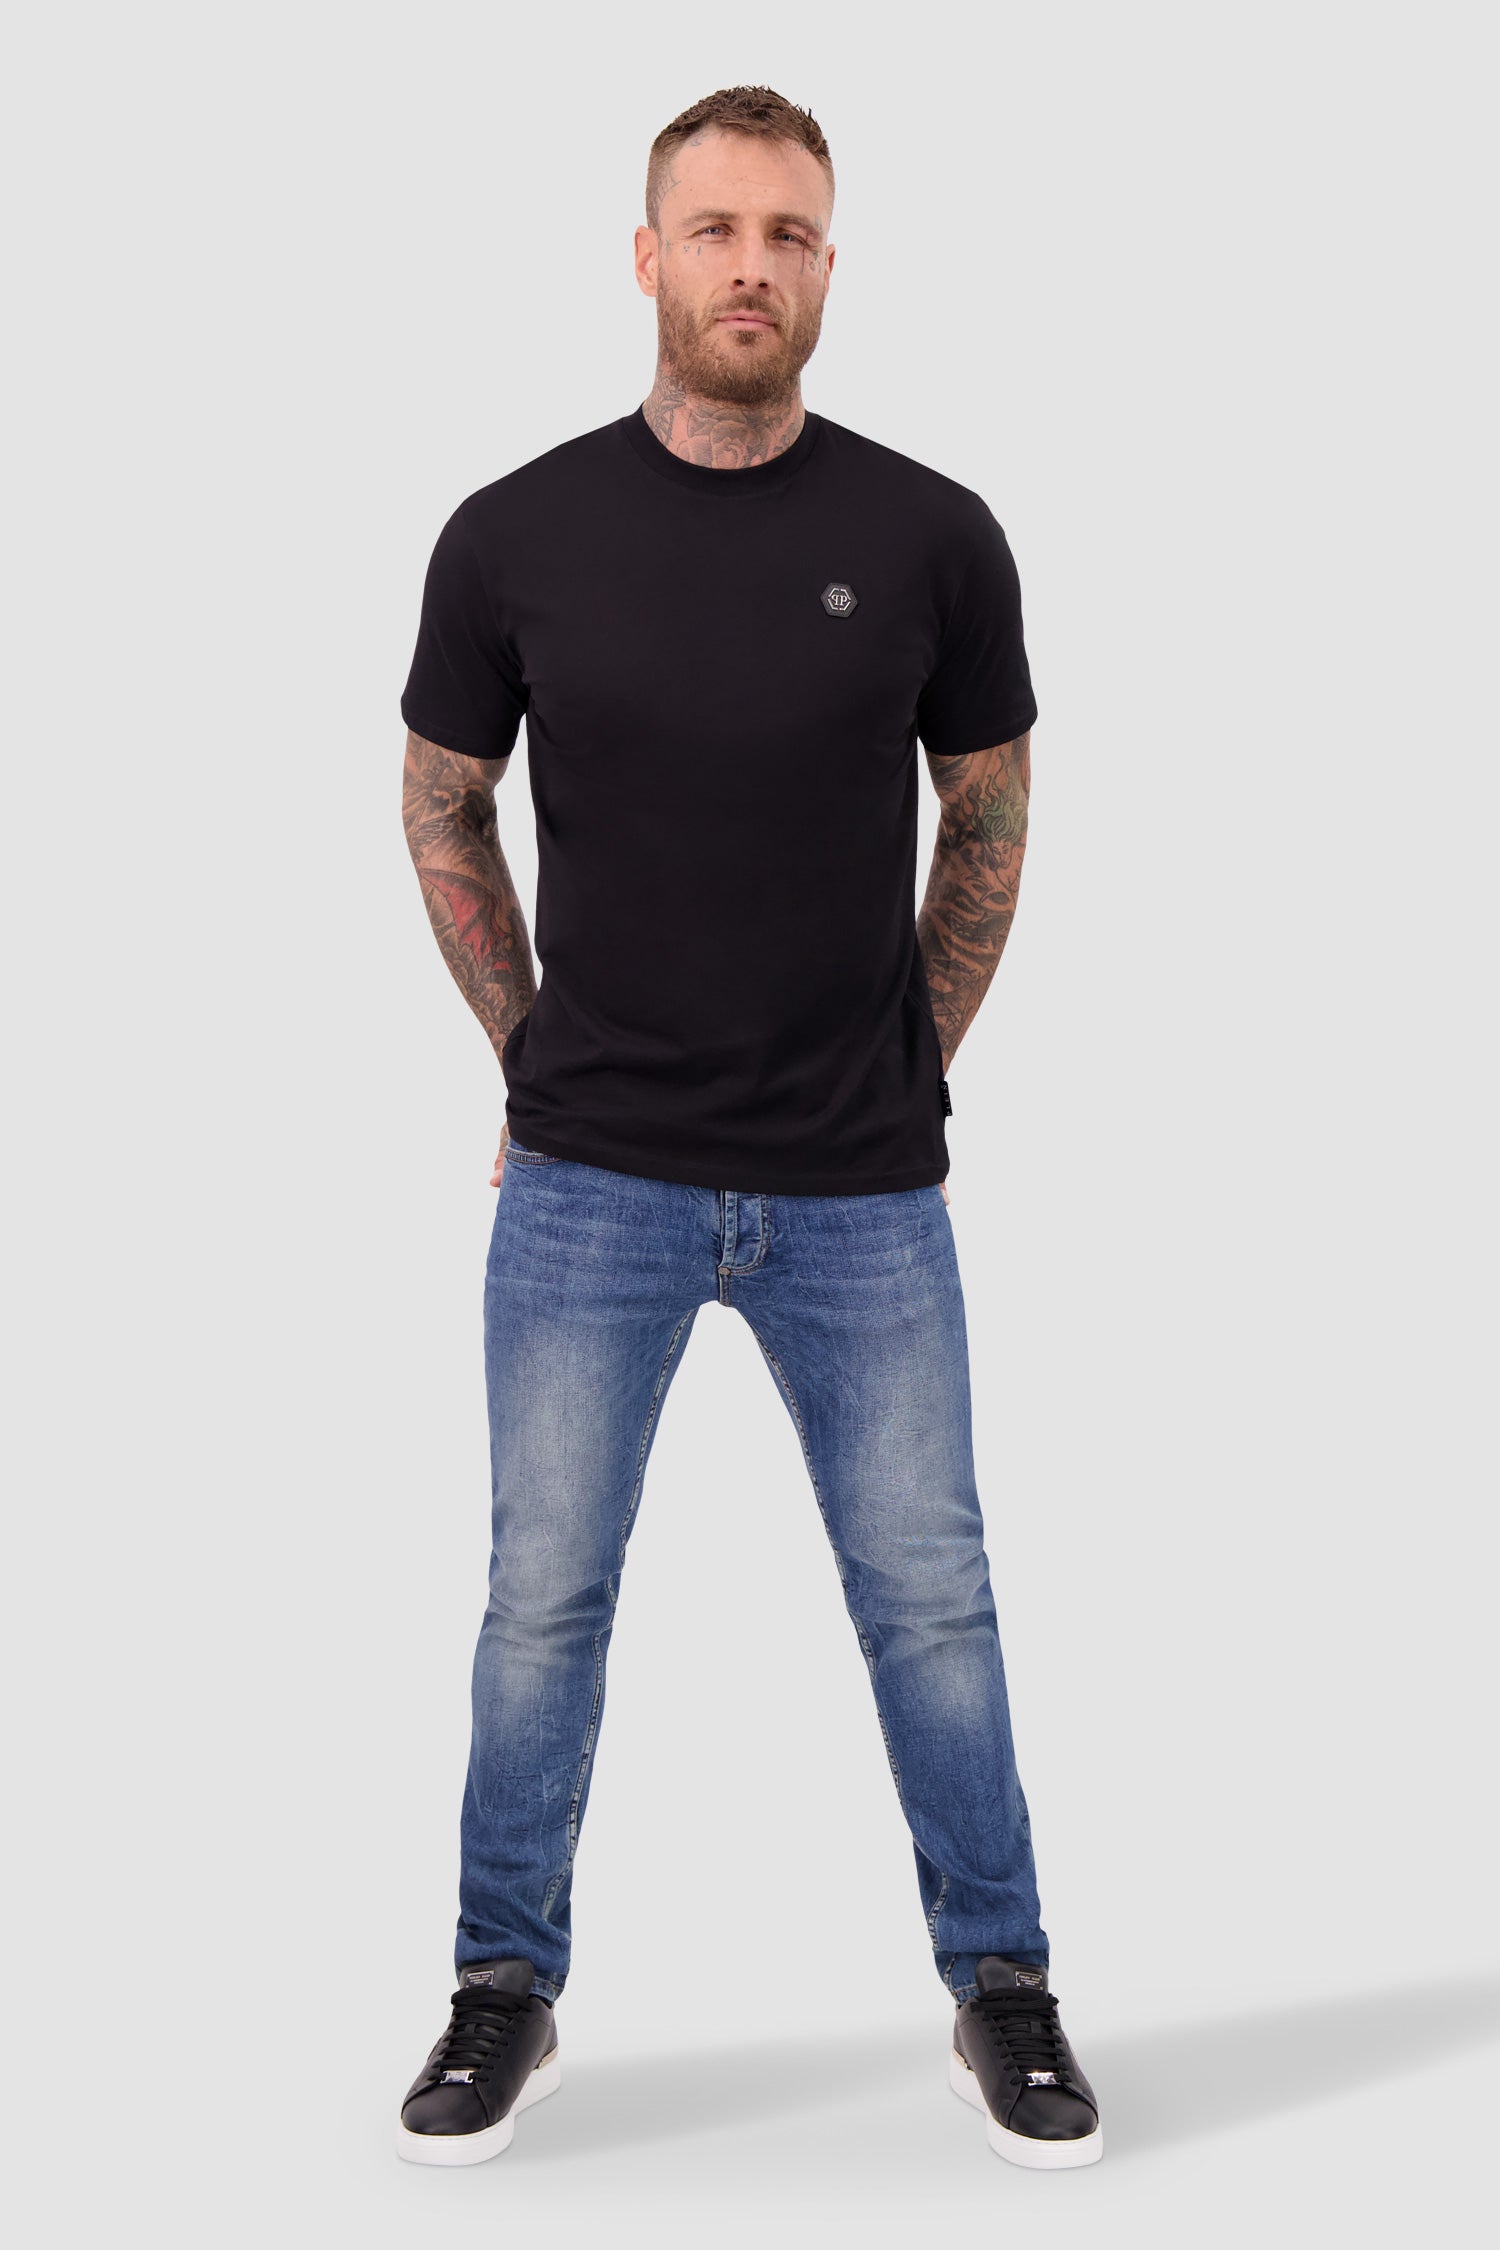 Philipp Plein Round Neck SS Basic T-Shirt